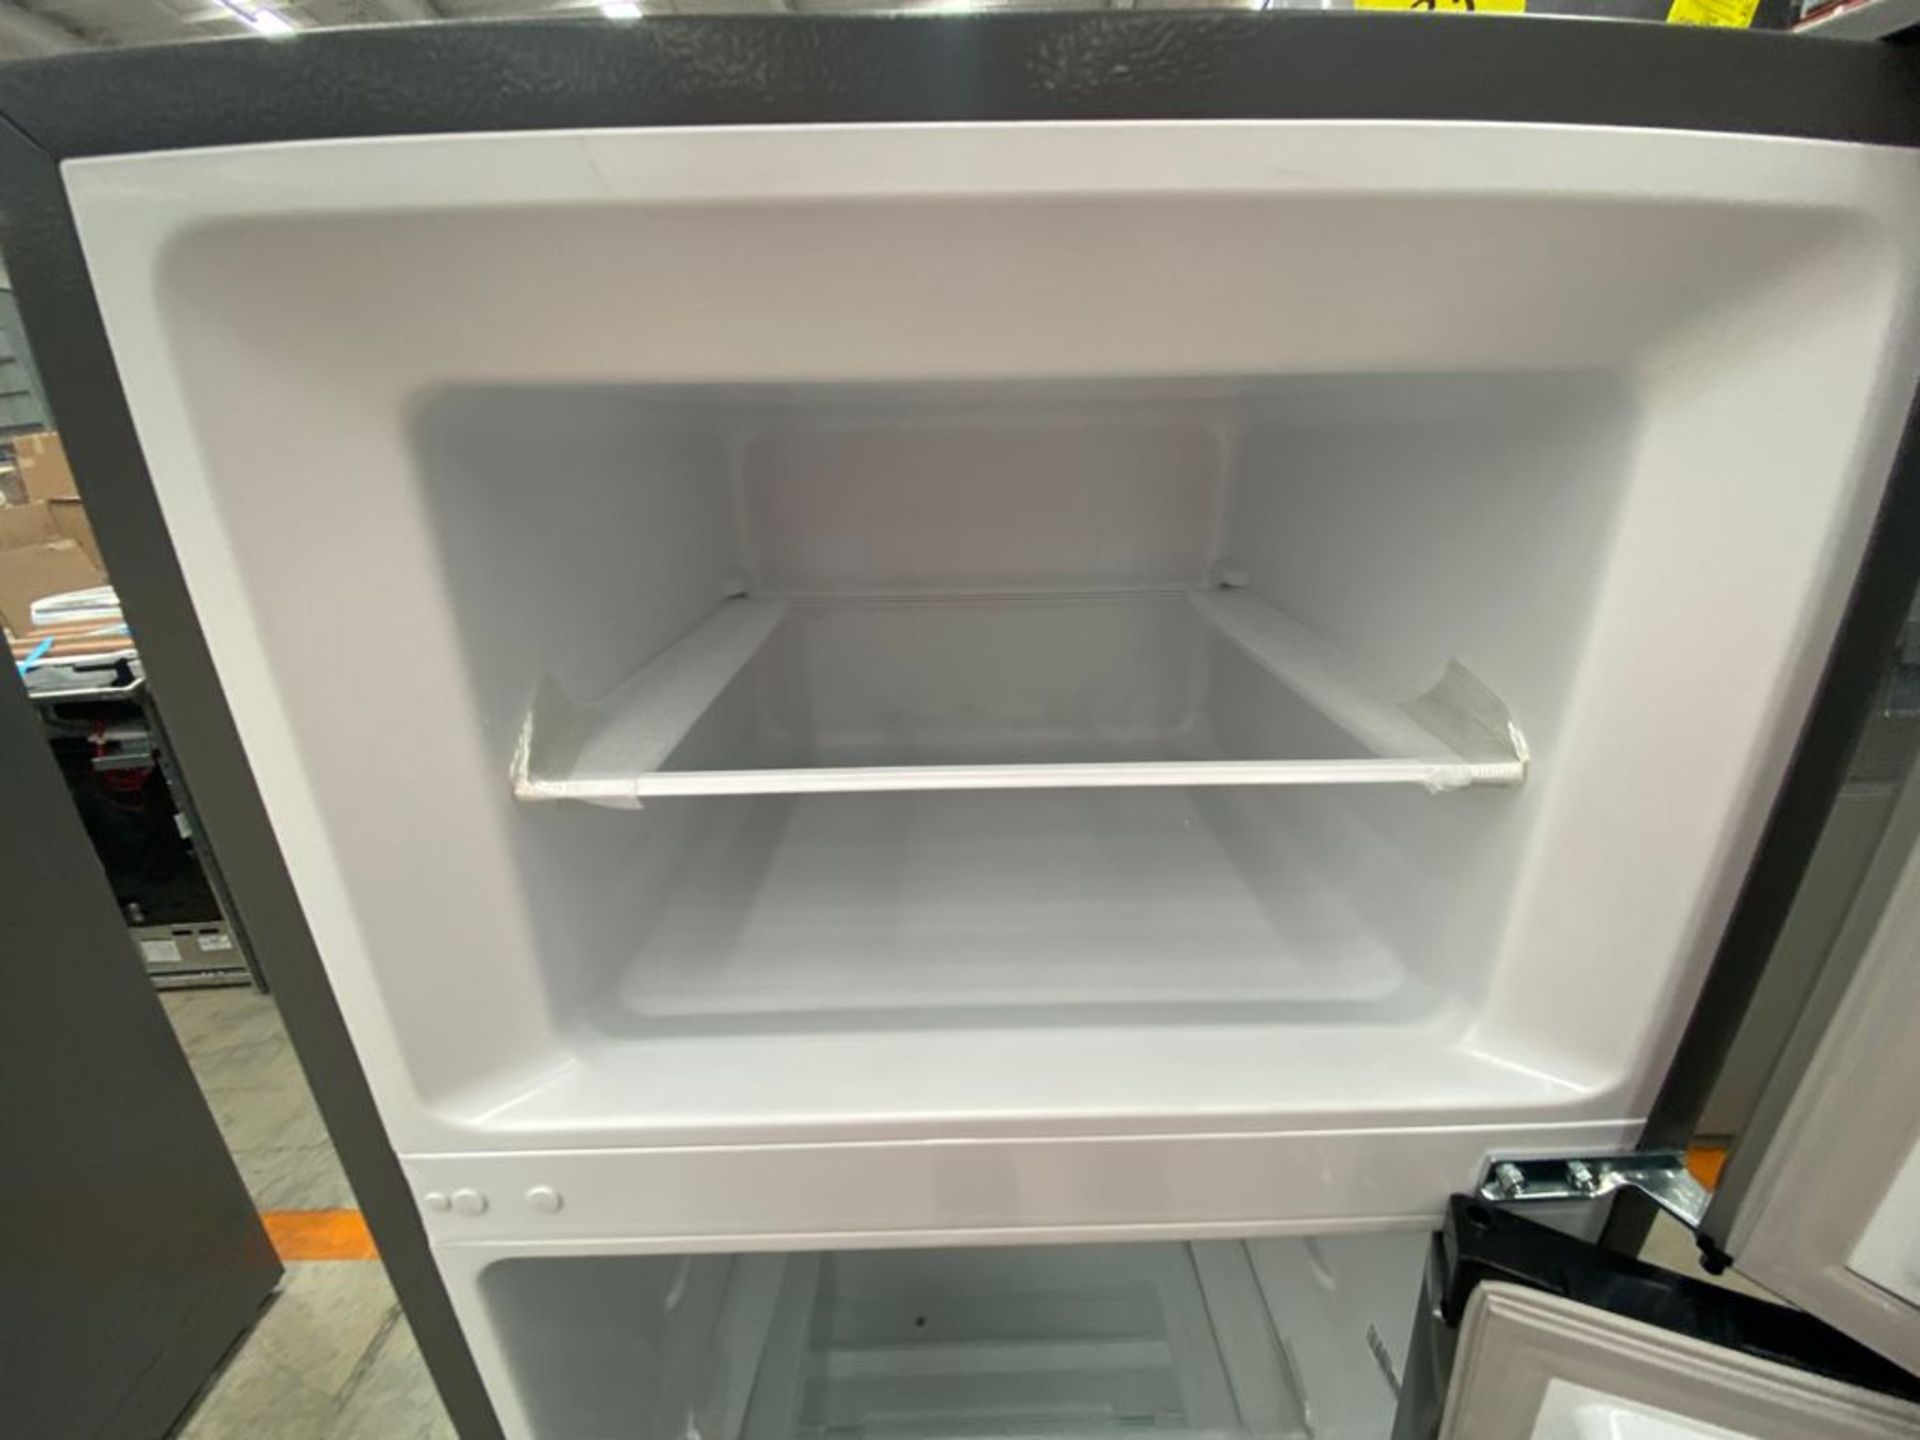 2 Refrigeradores marca Hisense color gris modelo RT80D6AWX - Image 22 of 28